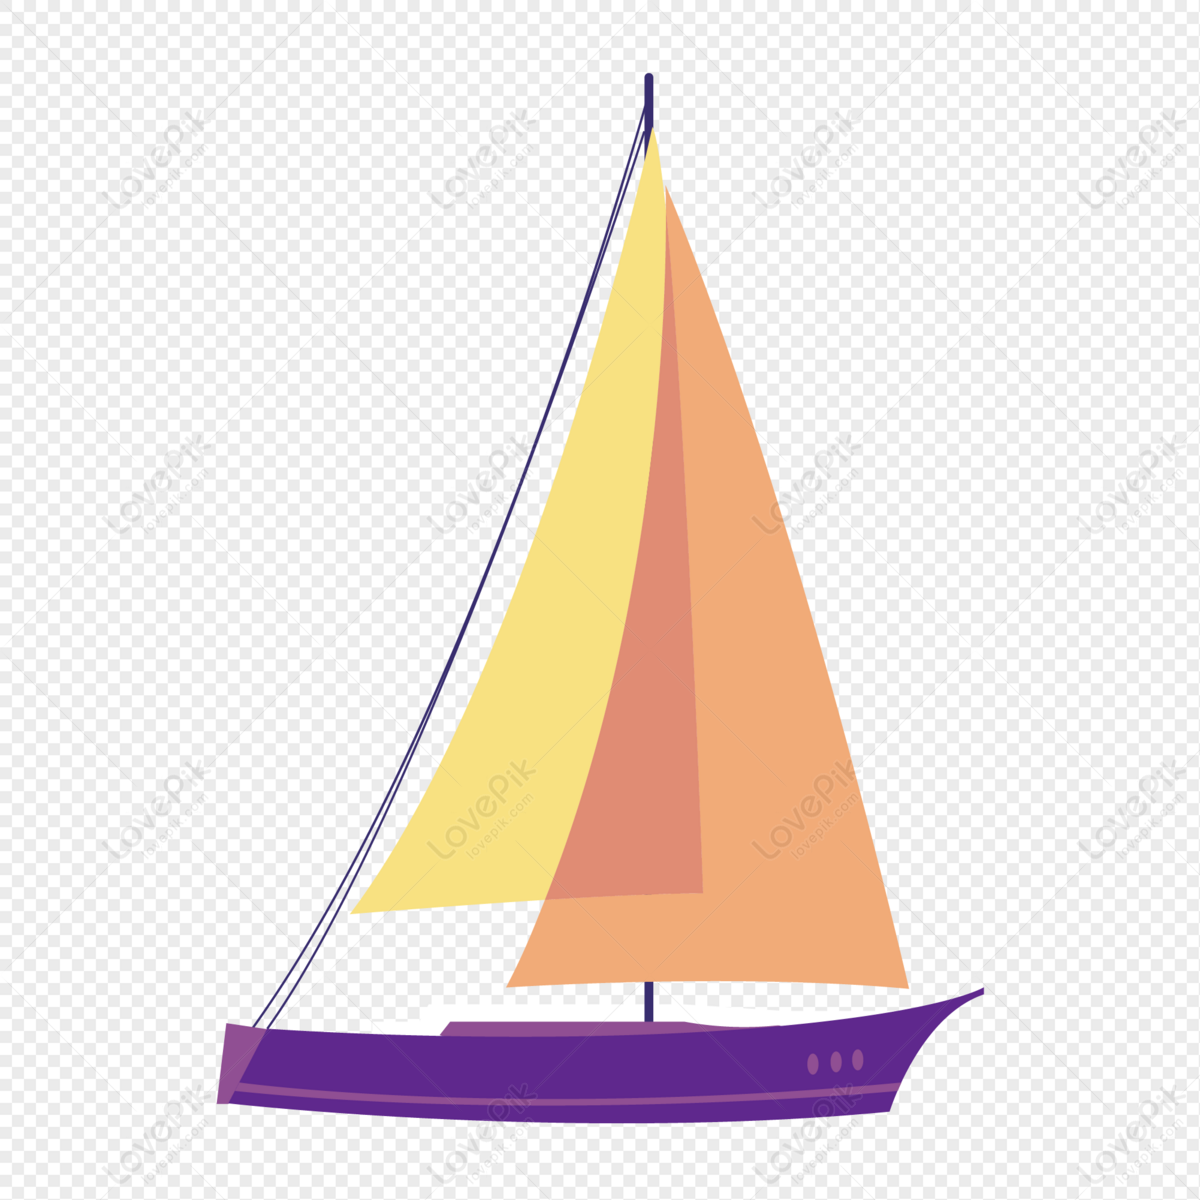 sailboat, watercraft, mini boats, boat material png image free download